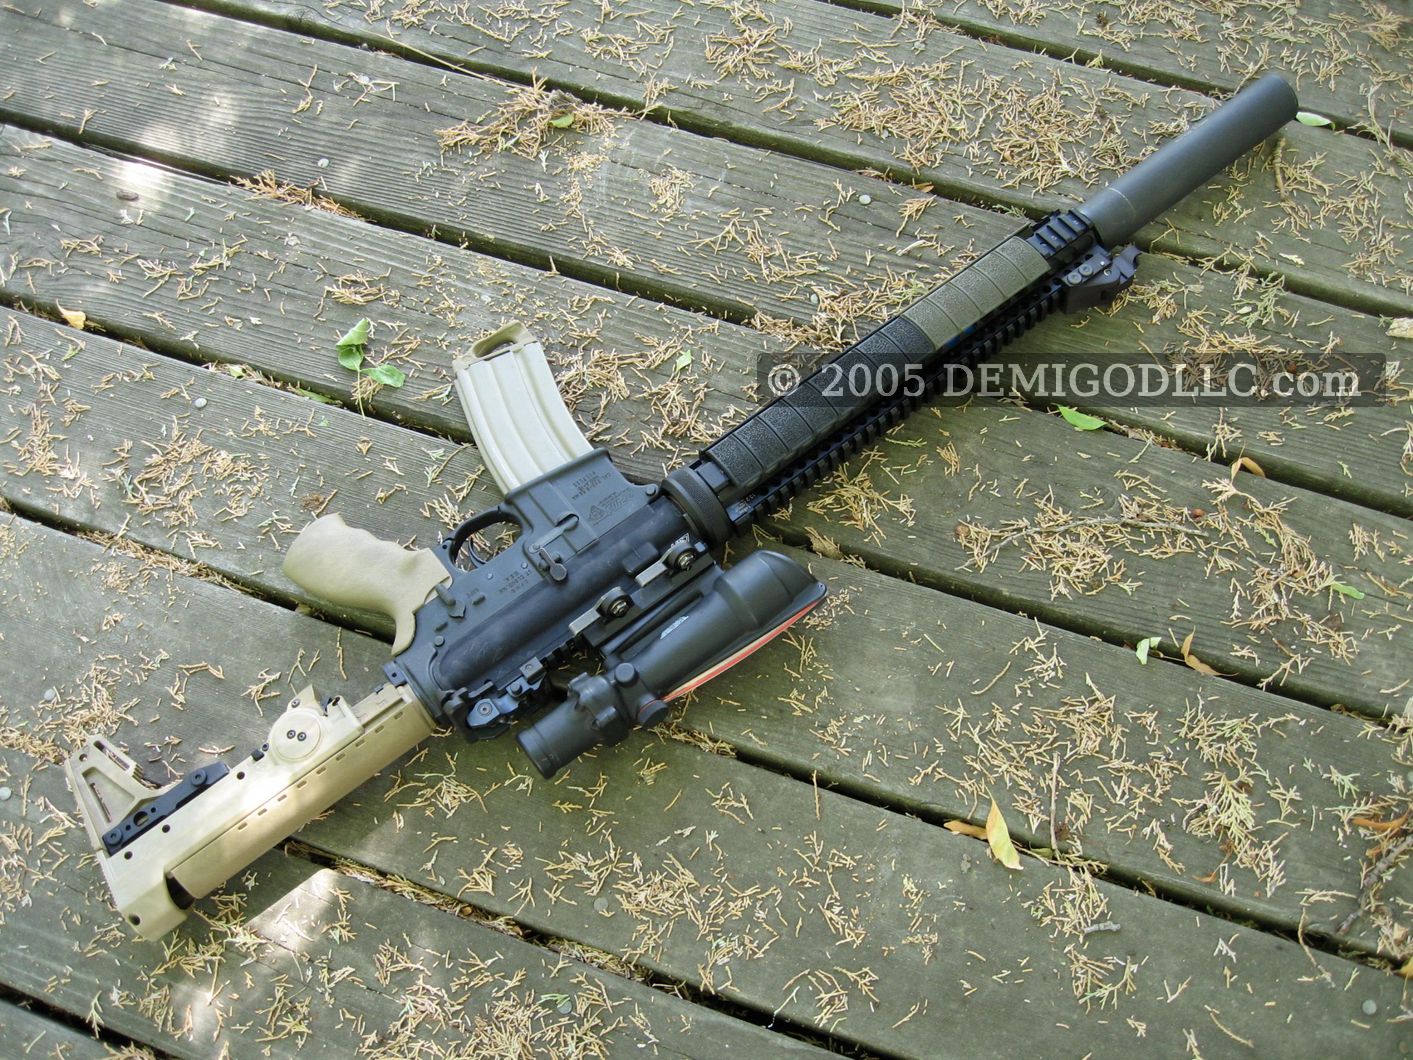 Super-RECCE/M4-SD lightweight suppressed AR15 rifle
, photo 